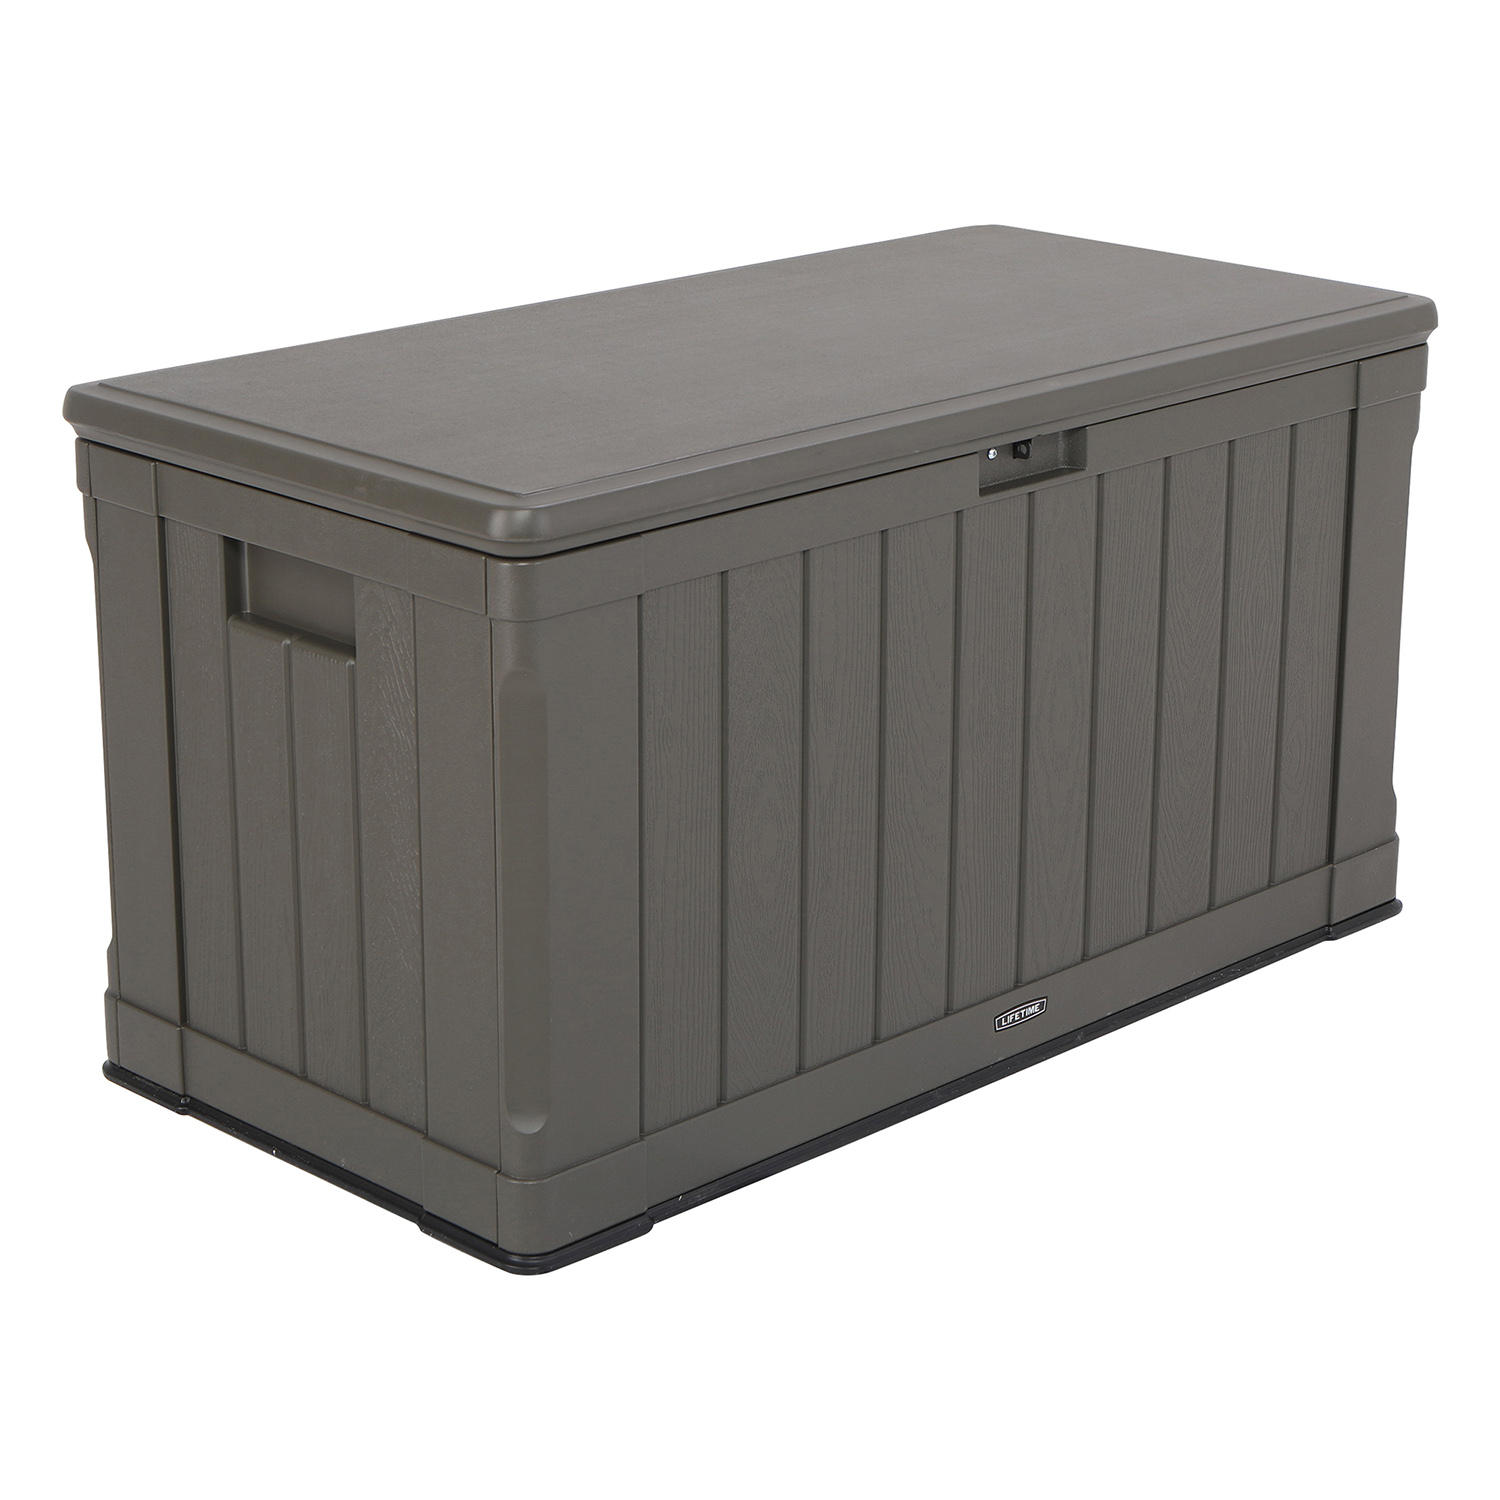 Lifetime (60089) 116 Gallon Outdoor Deck/Storage Box